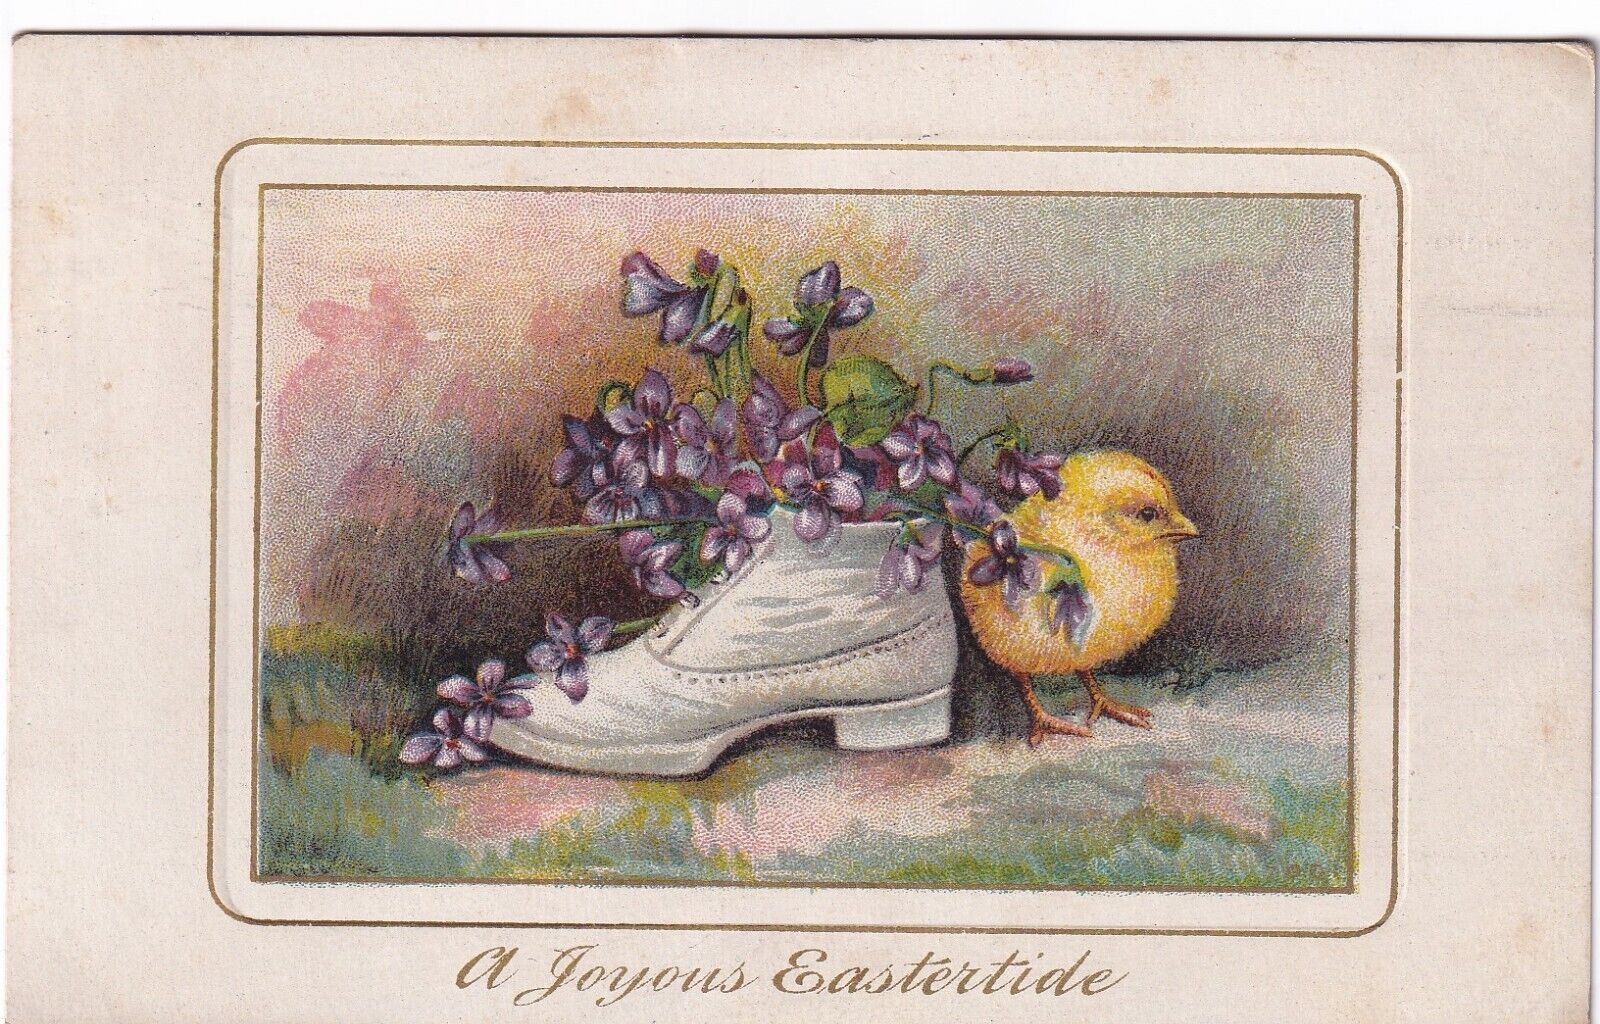 VTG Postcard Antique, 1915, A Joyous Eastertide, Shoe chick